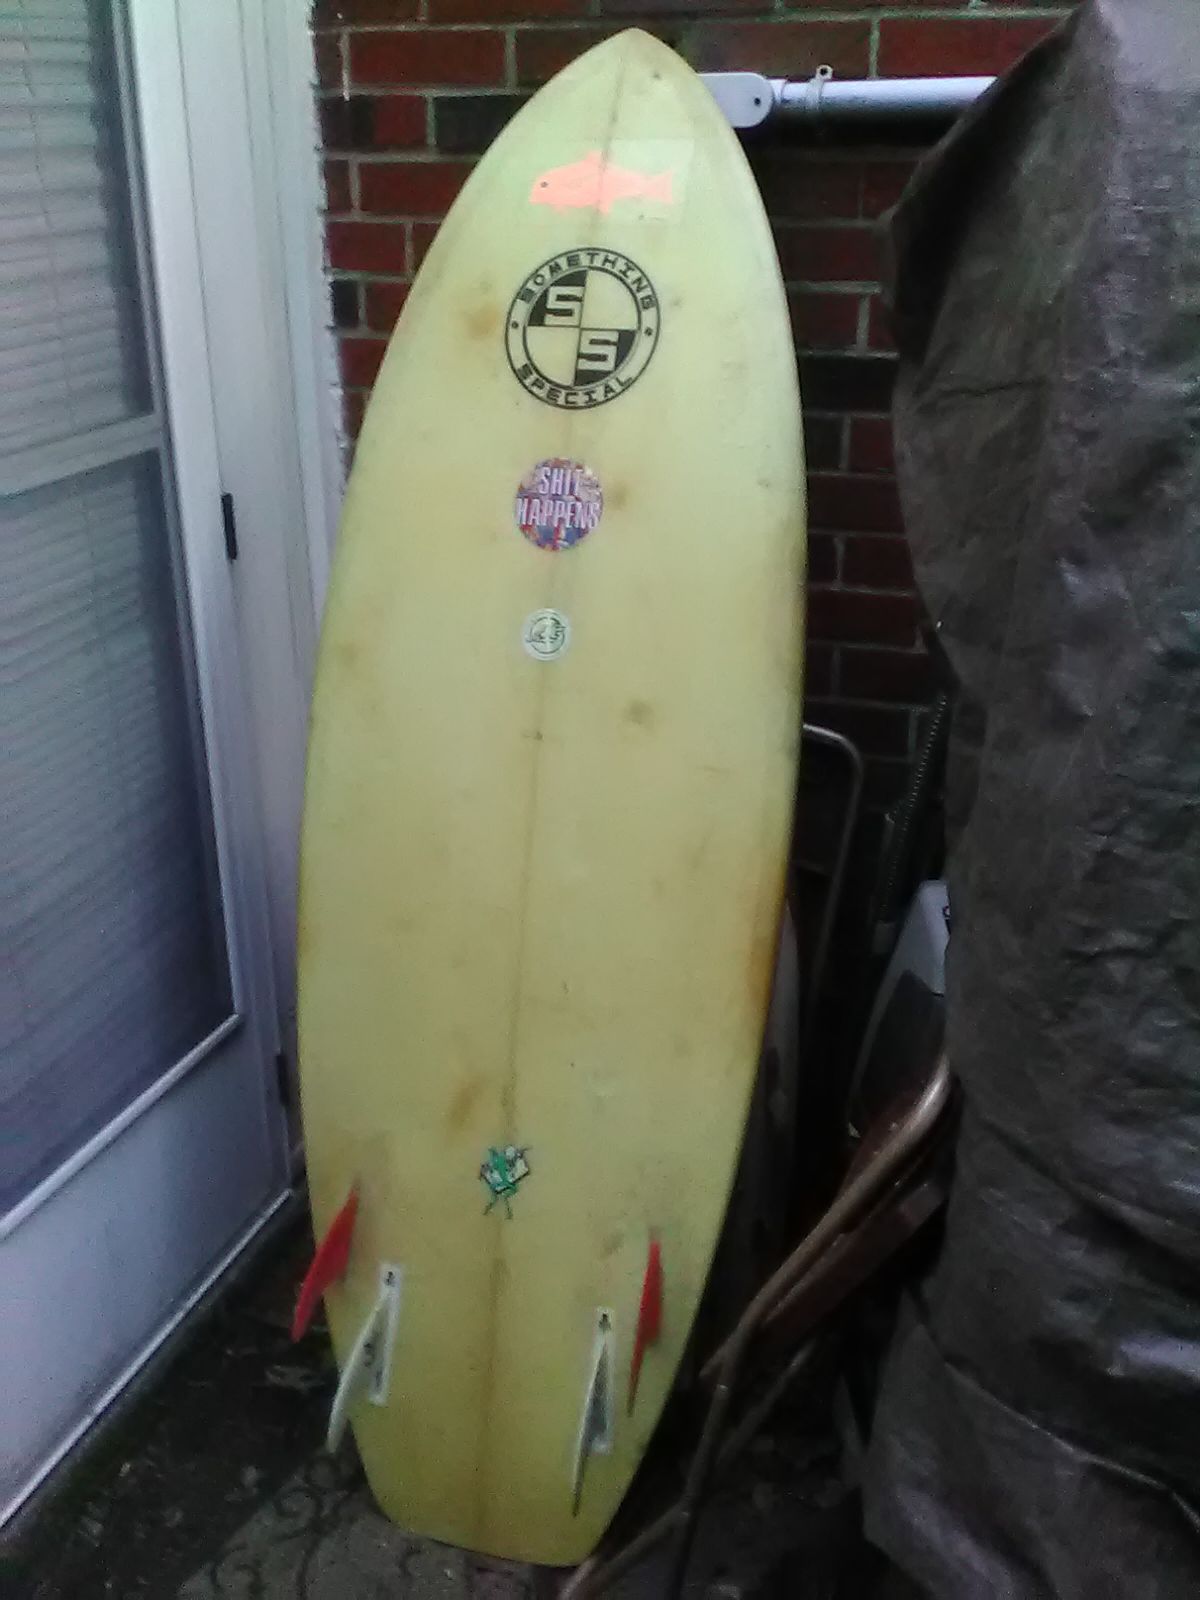 Vintage slingerland surfboard something special 5 foot 8 in